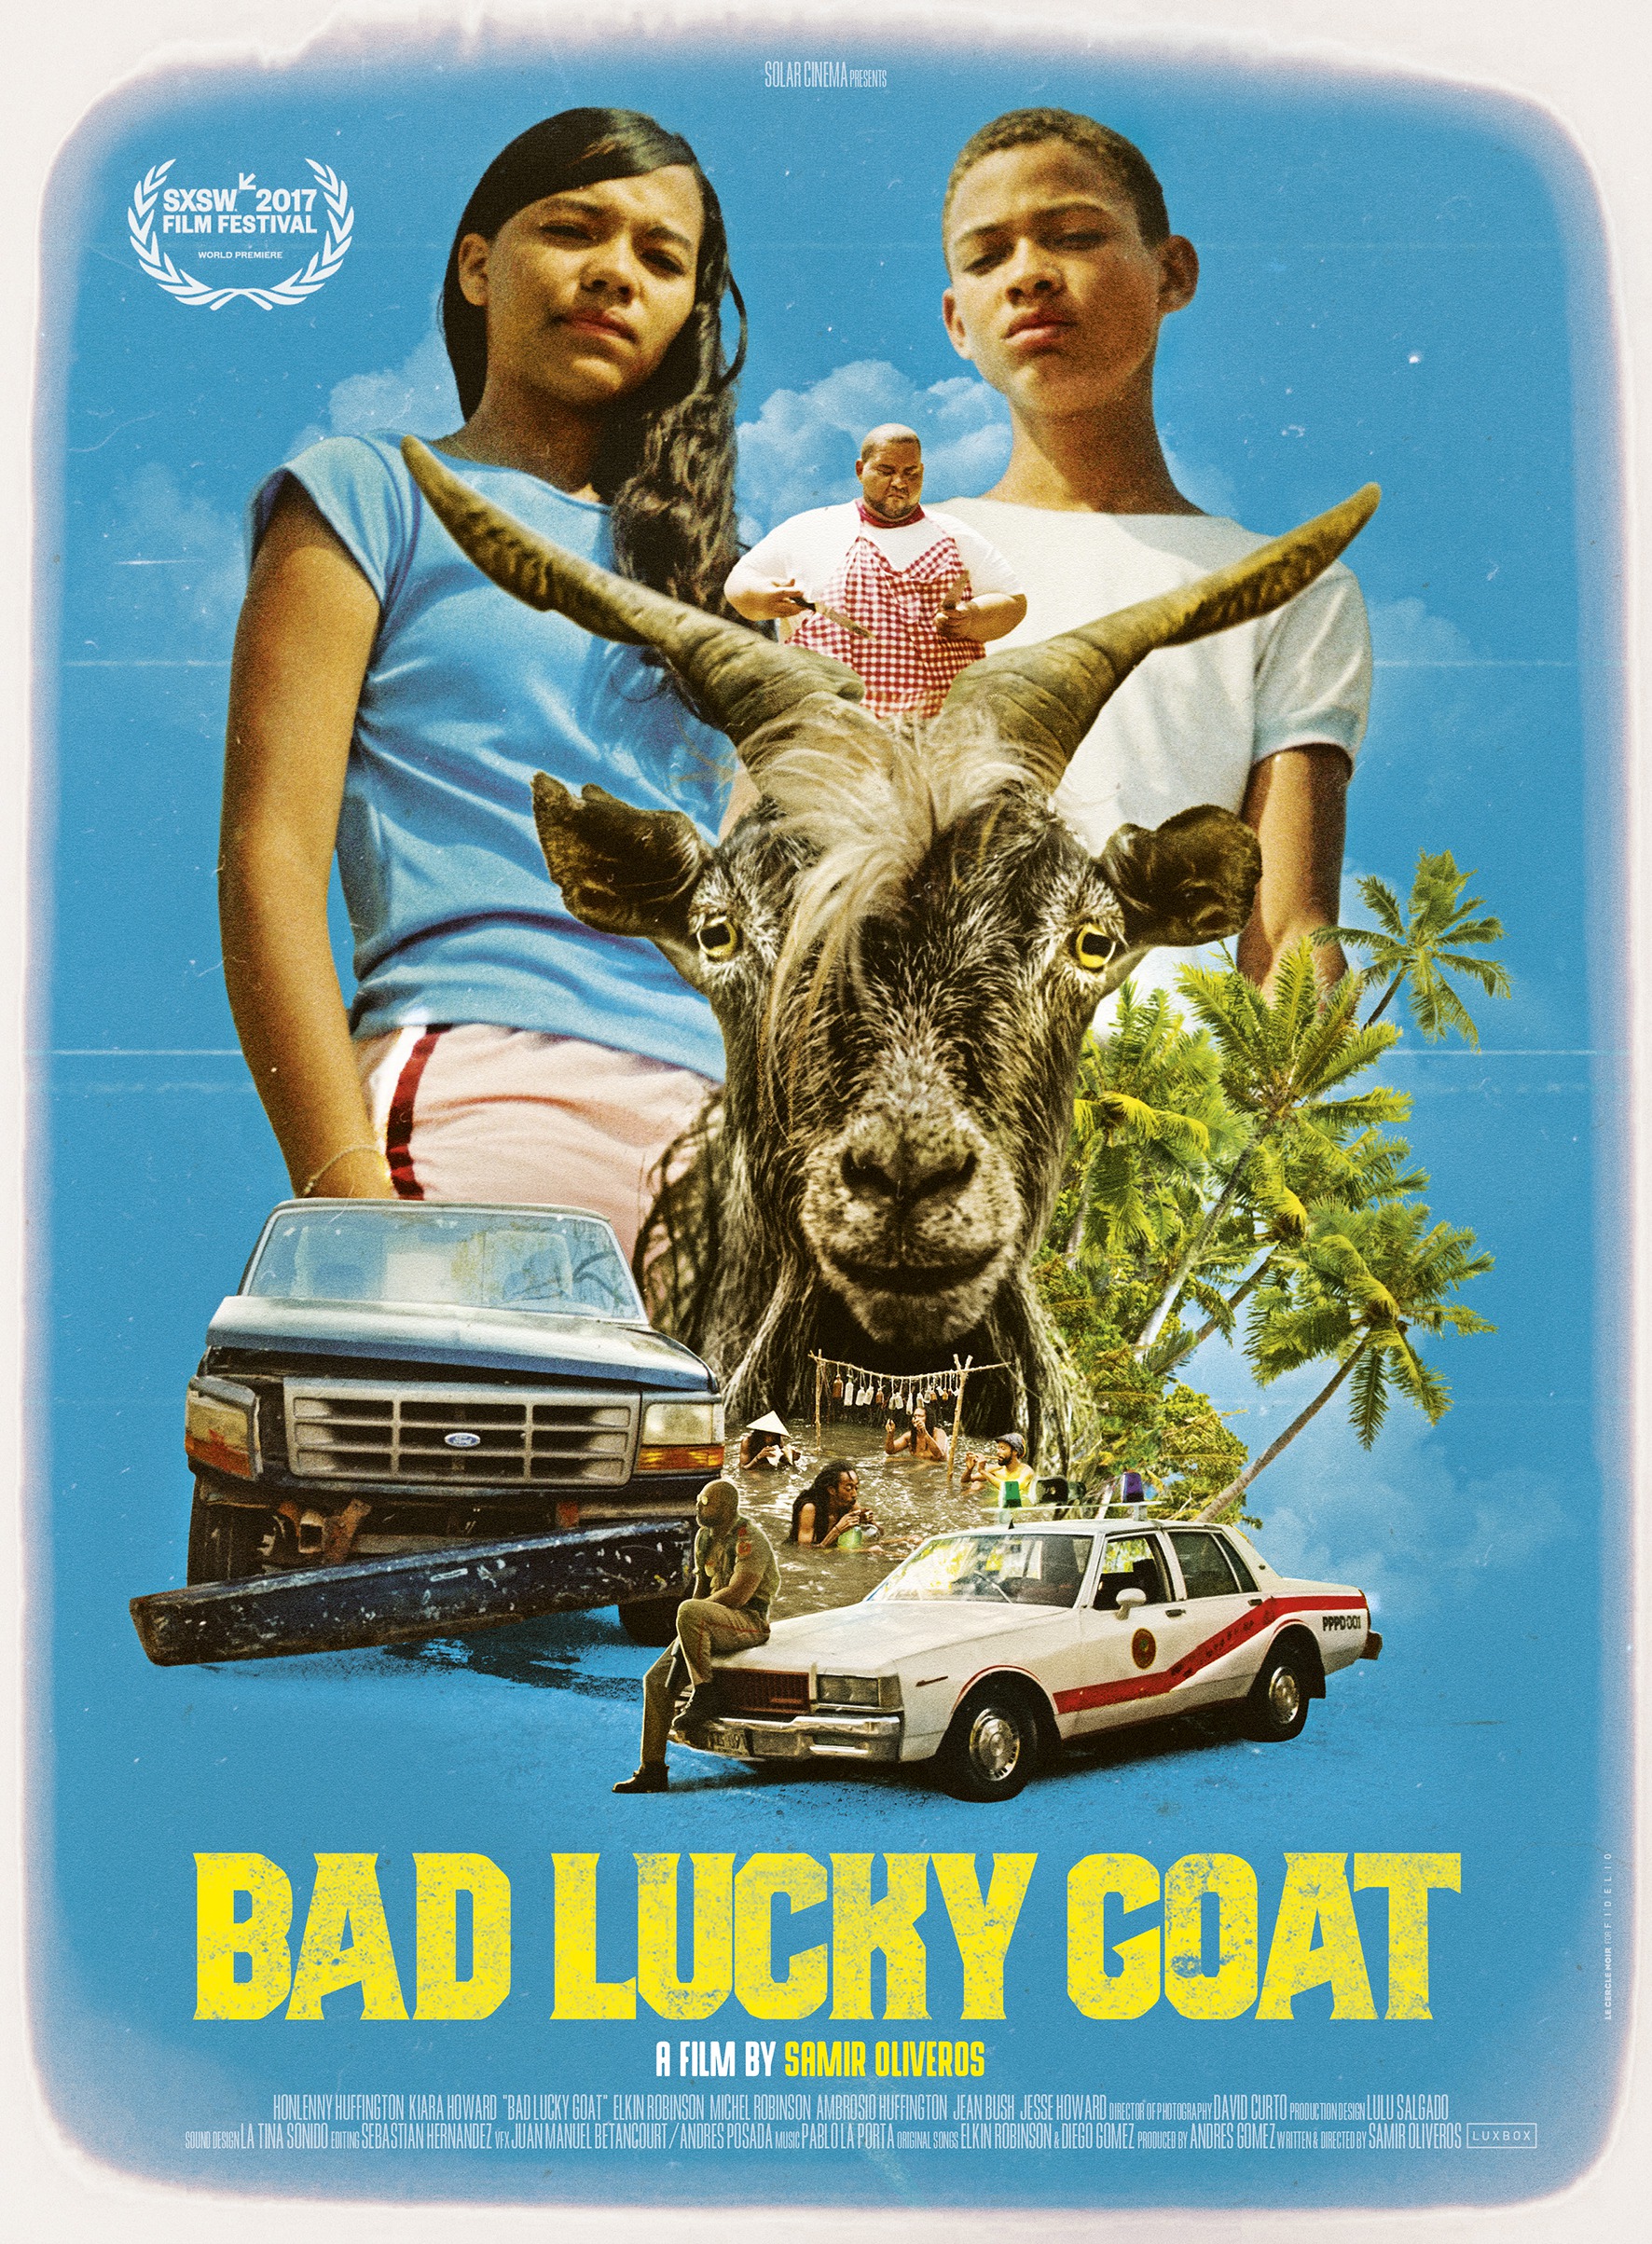 Bad Lucky Goat